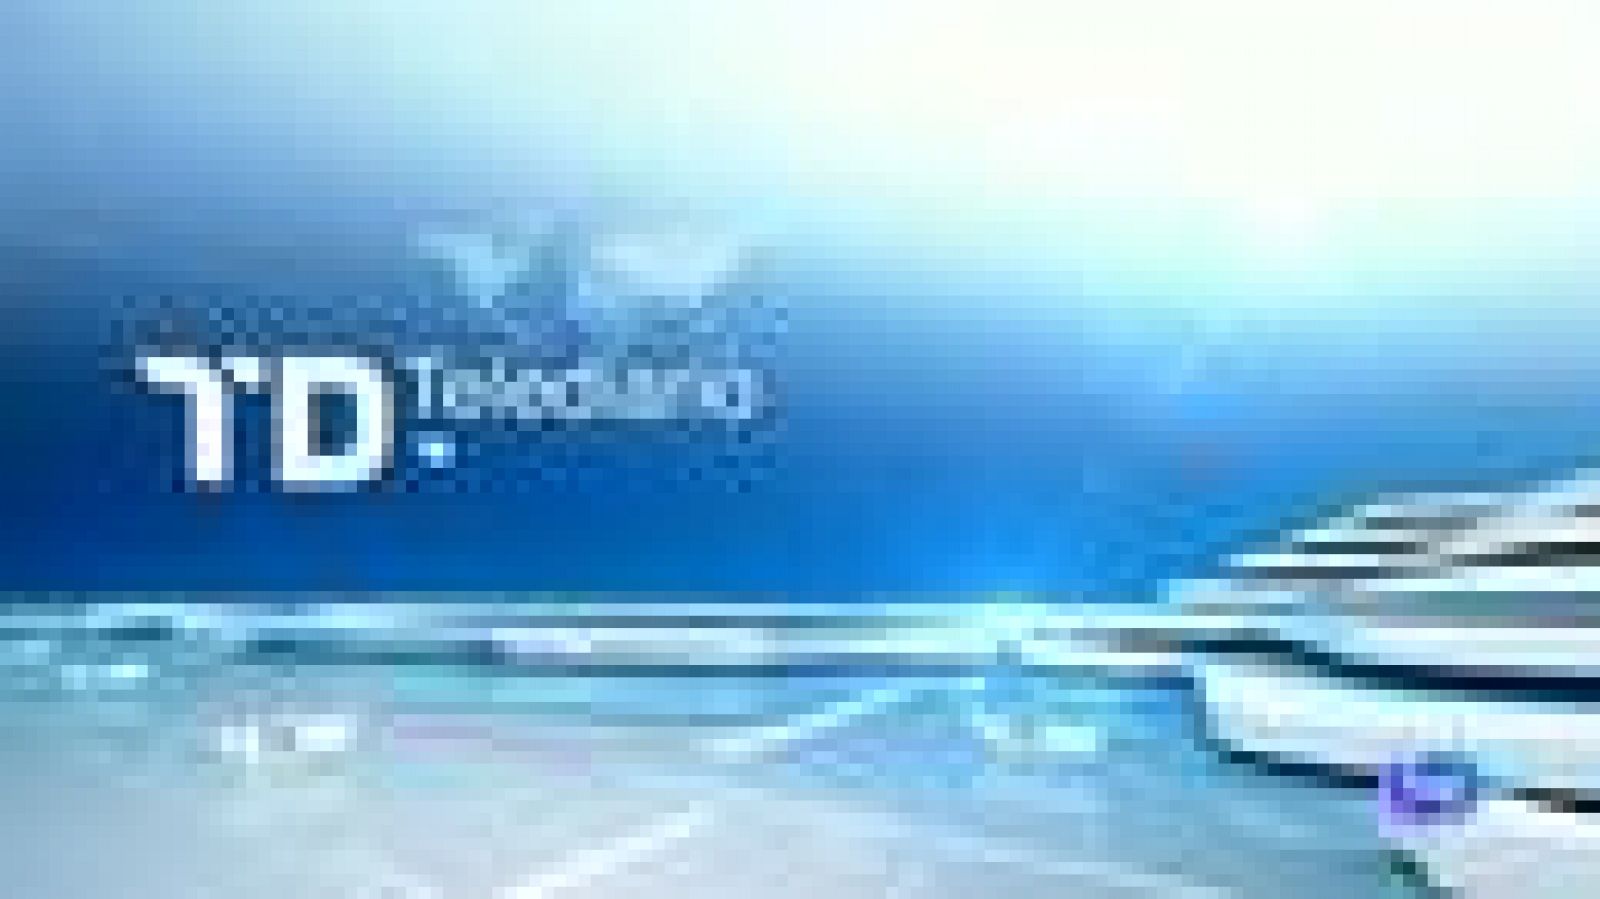 Telediario 1: Telediario Matinal en 4' - 21/09/12 | RTVE Play